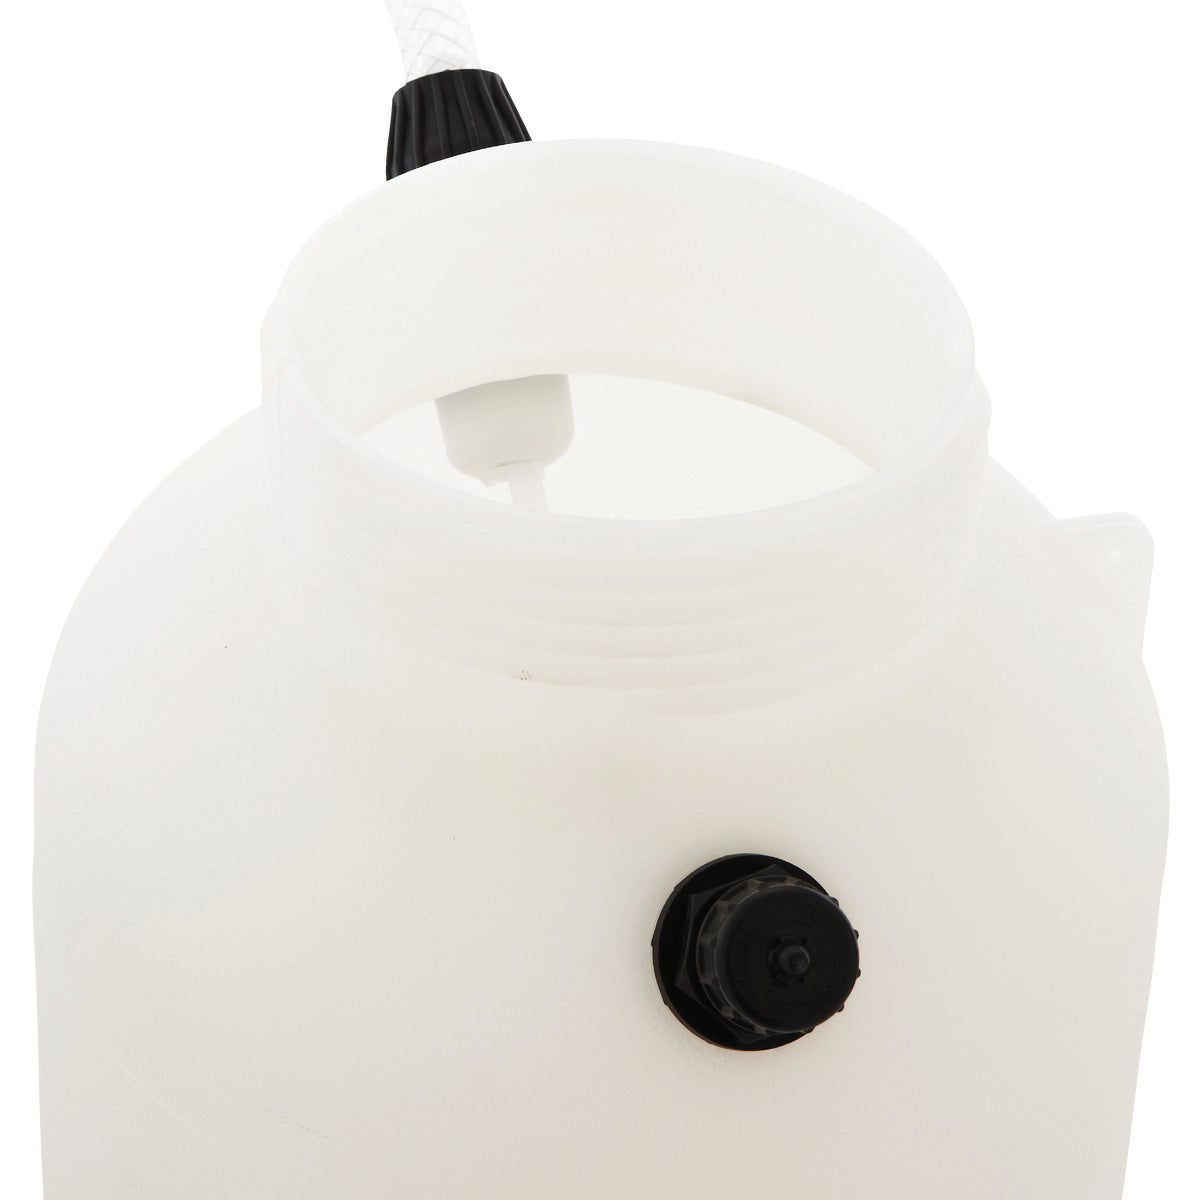 TABOR TOOLS: N-80A 2-Gallon Pump Sprayer with Shoulder Strap